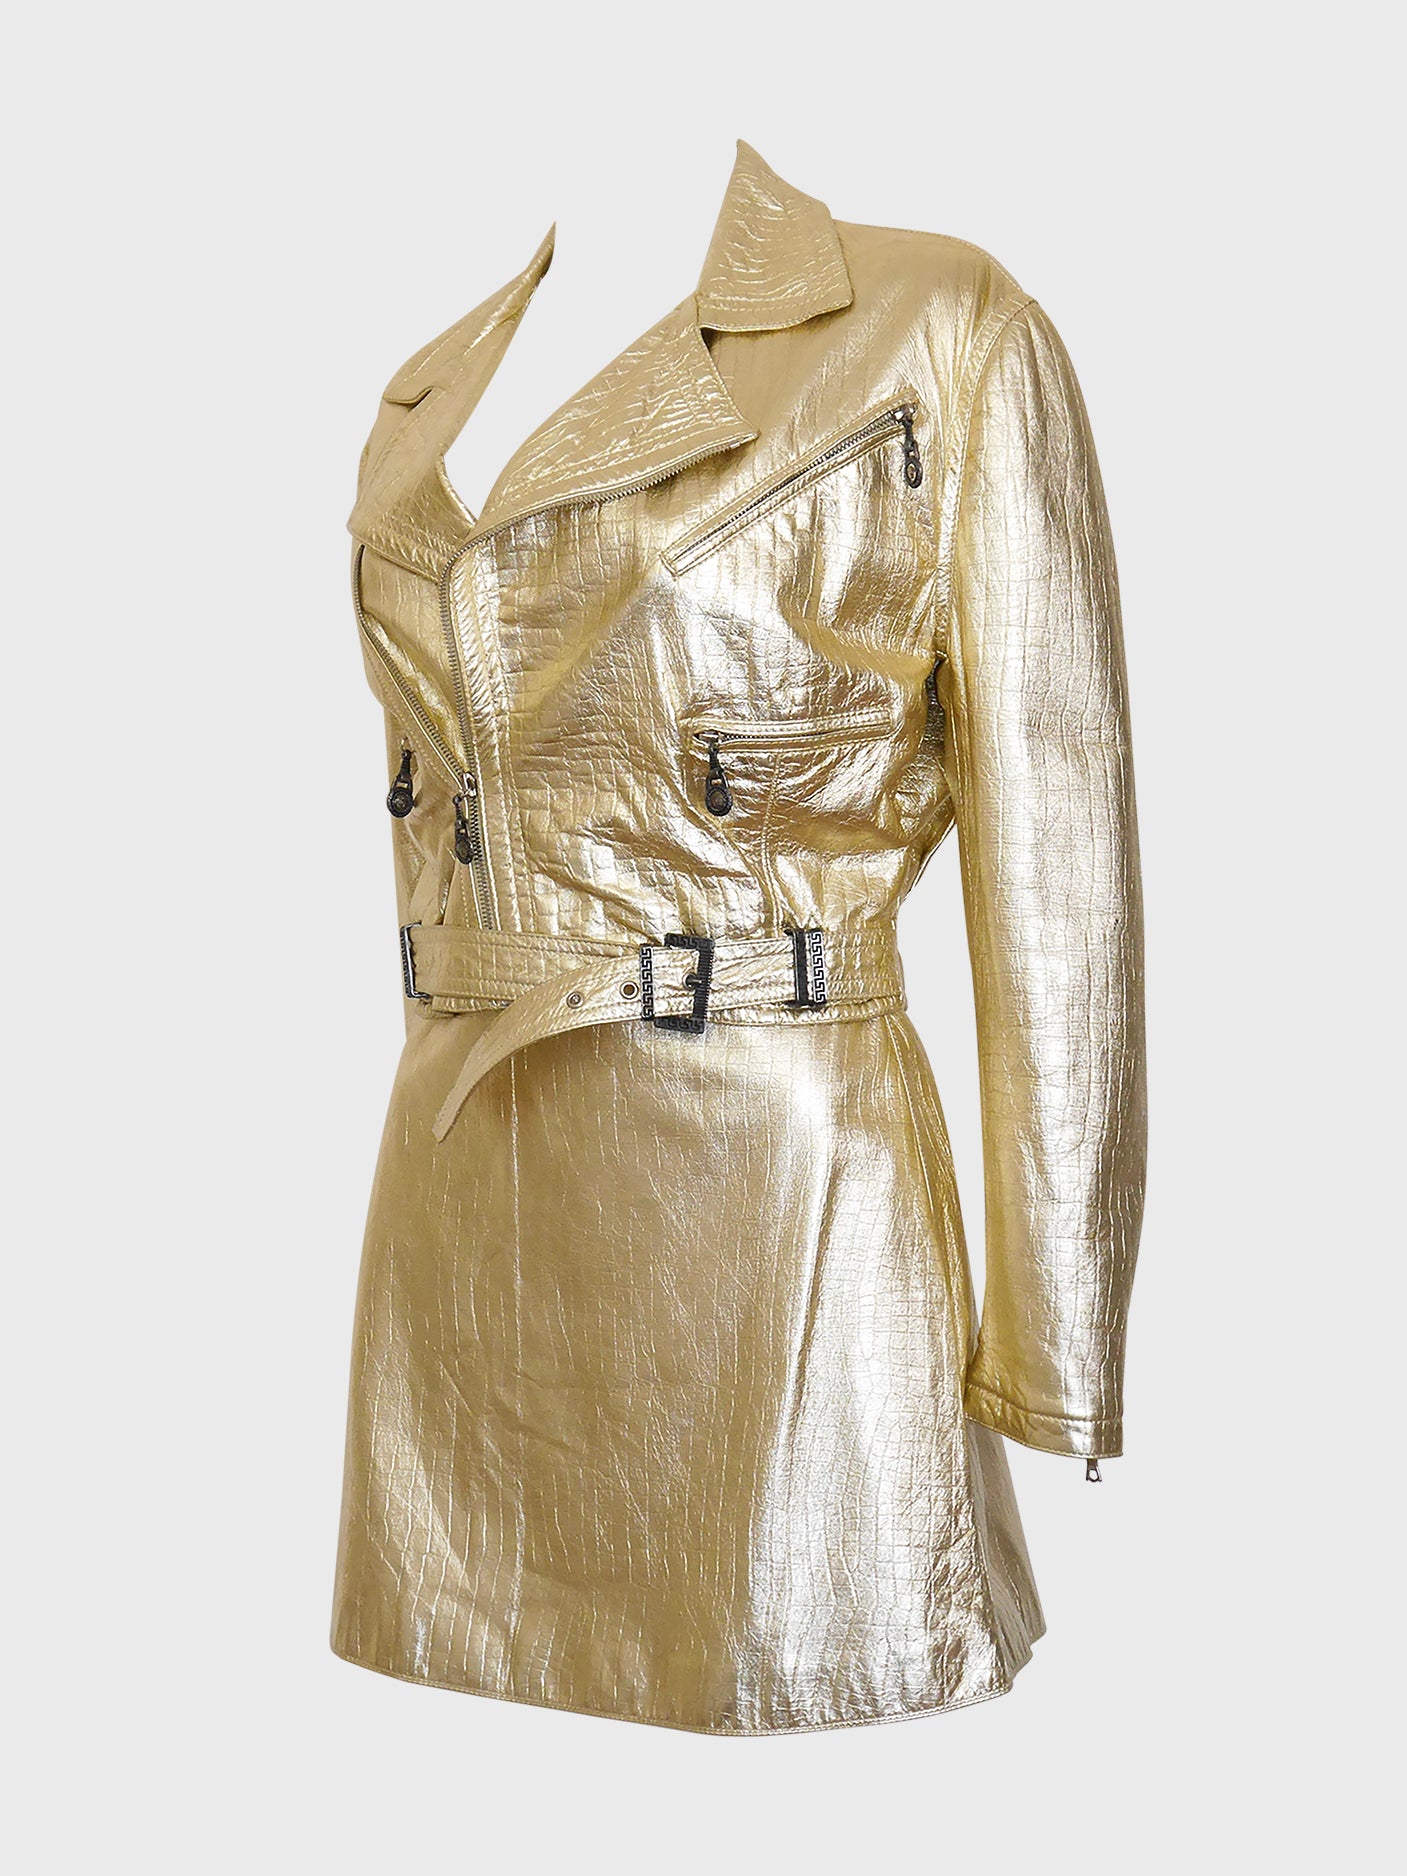 GIANNI VERSACE Fall 1994 Vintage Metallic Gold Leather Biker Jacket & Skirt Suit